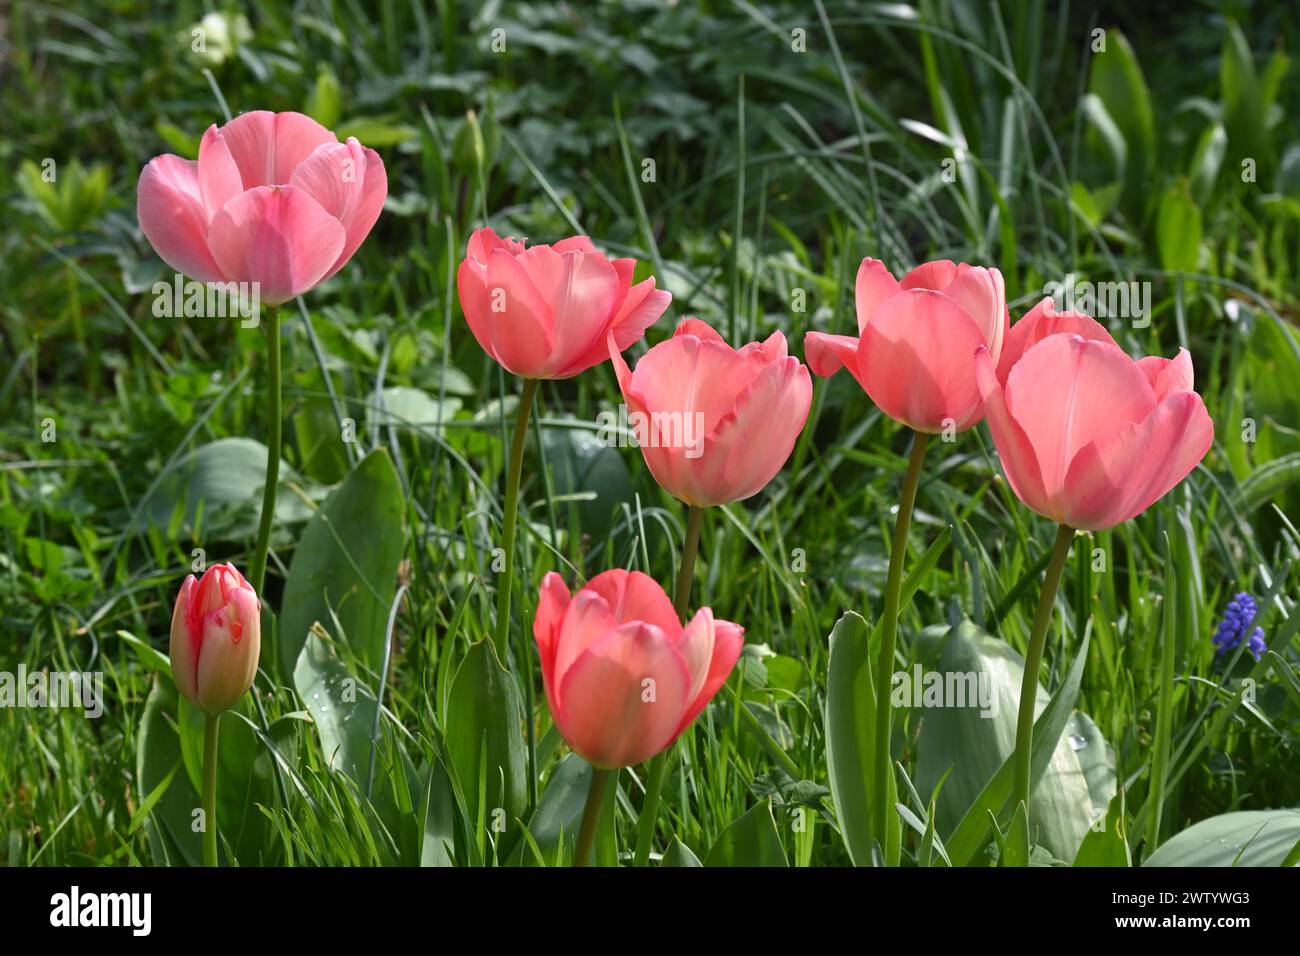 Newly opened pink spring flowers of tulip, tulipa Darwin Hybrid 'Mystick Van Eijk' growing in grass in UK garden March Stock Photo